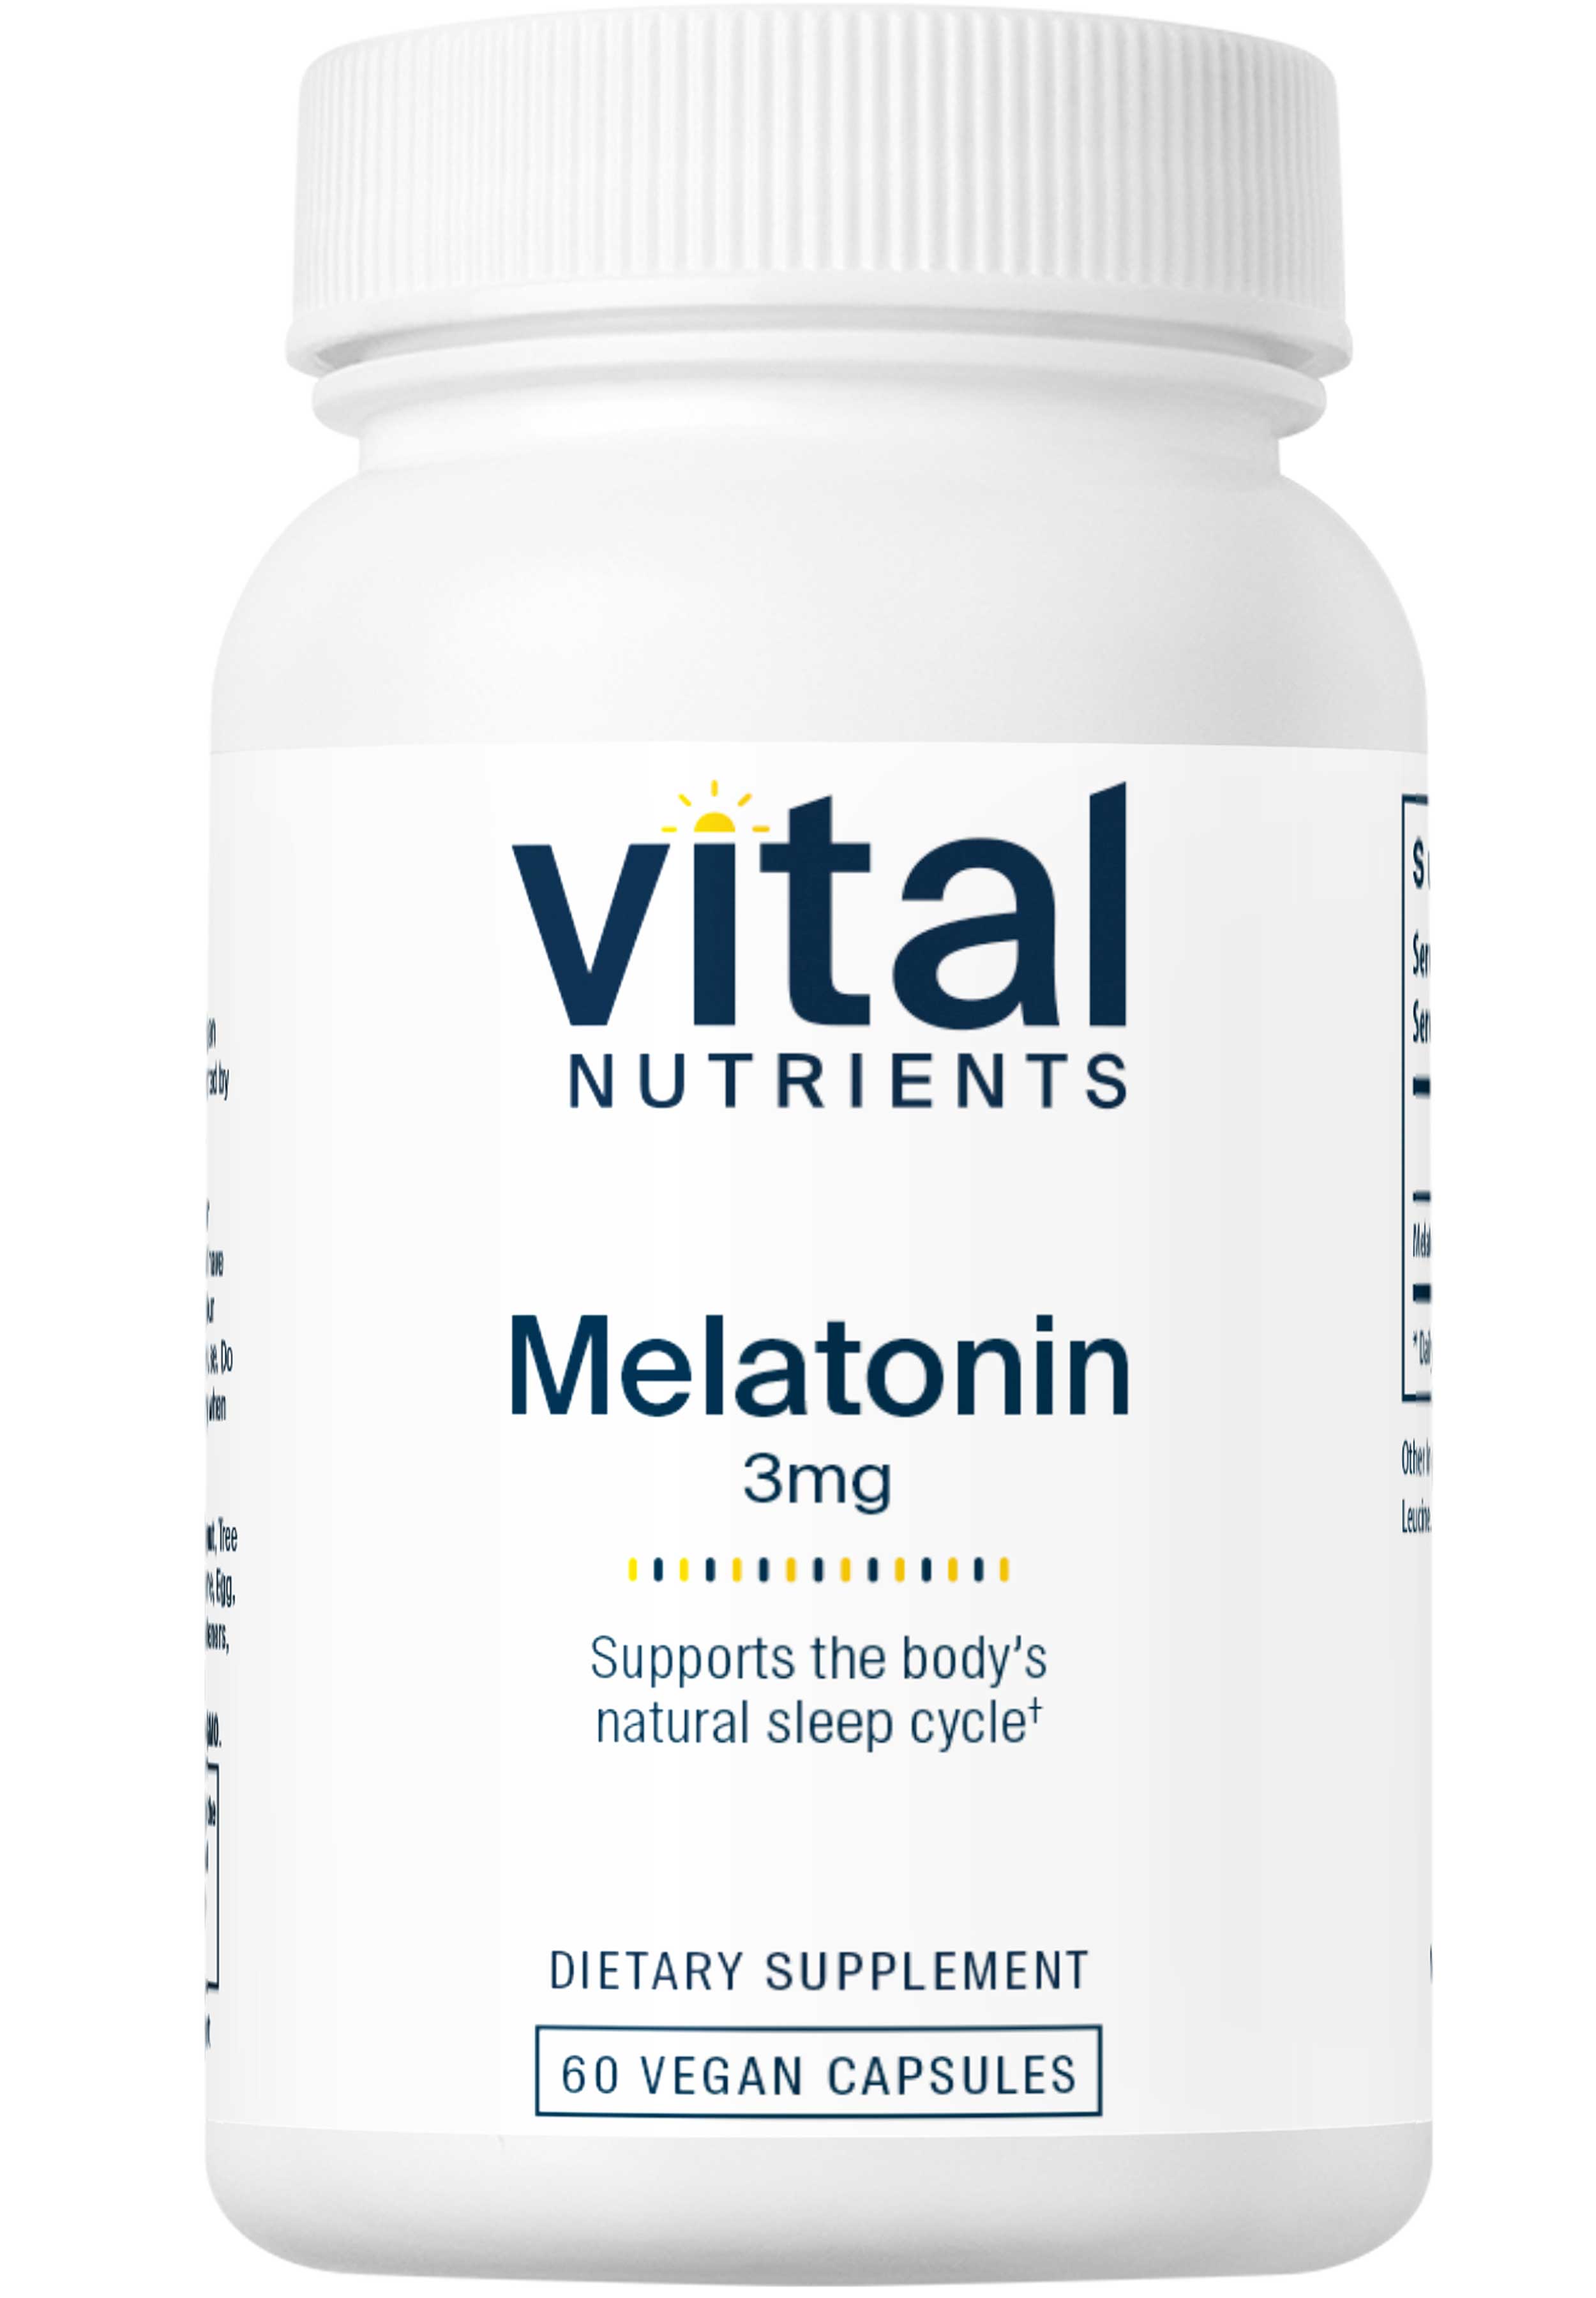 Vital Nutrients Melatonin 3mg